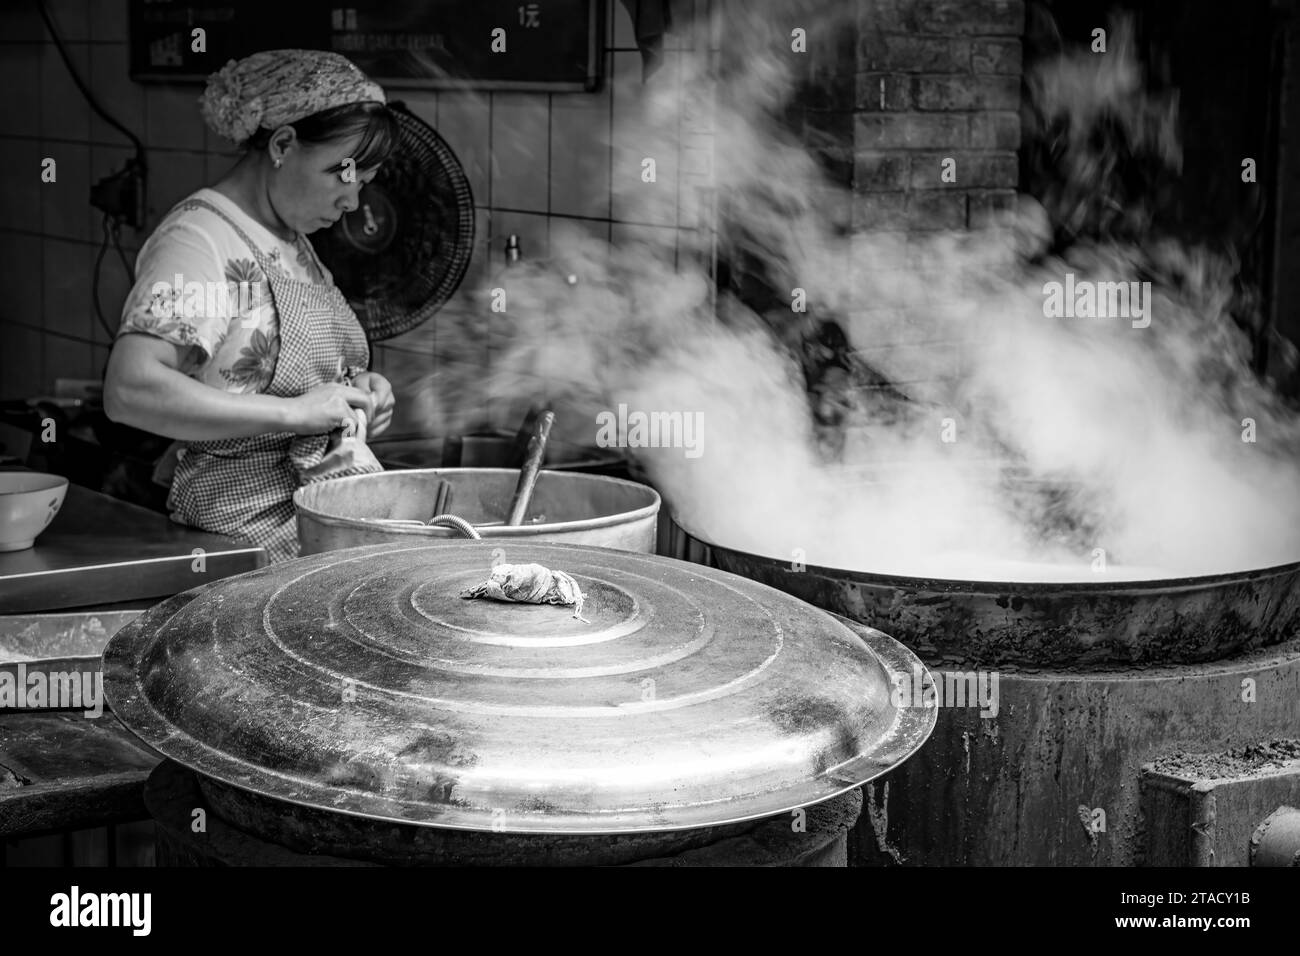 https://c8.alamy.com/comp/2TACY1B/cooking-in-big-pots-in-xian-in-china-august-14-2014-2TACY1B.jpg